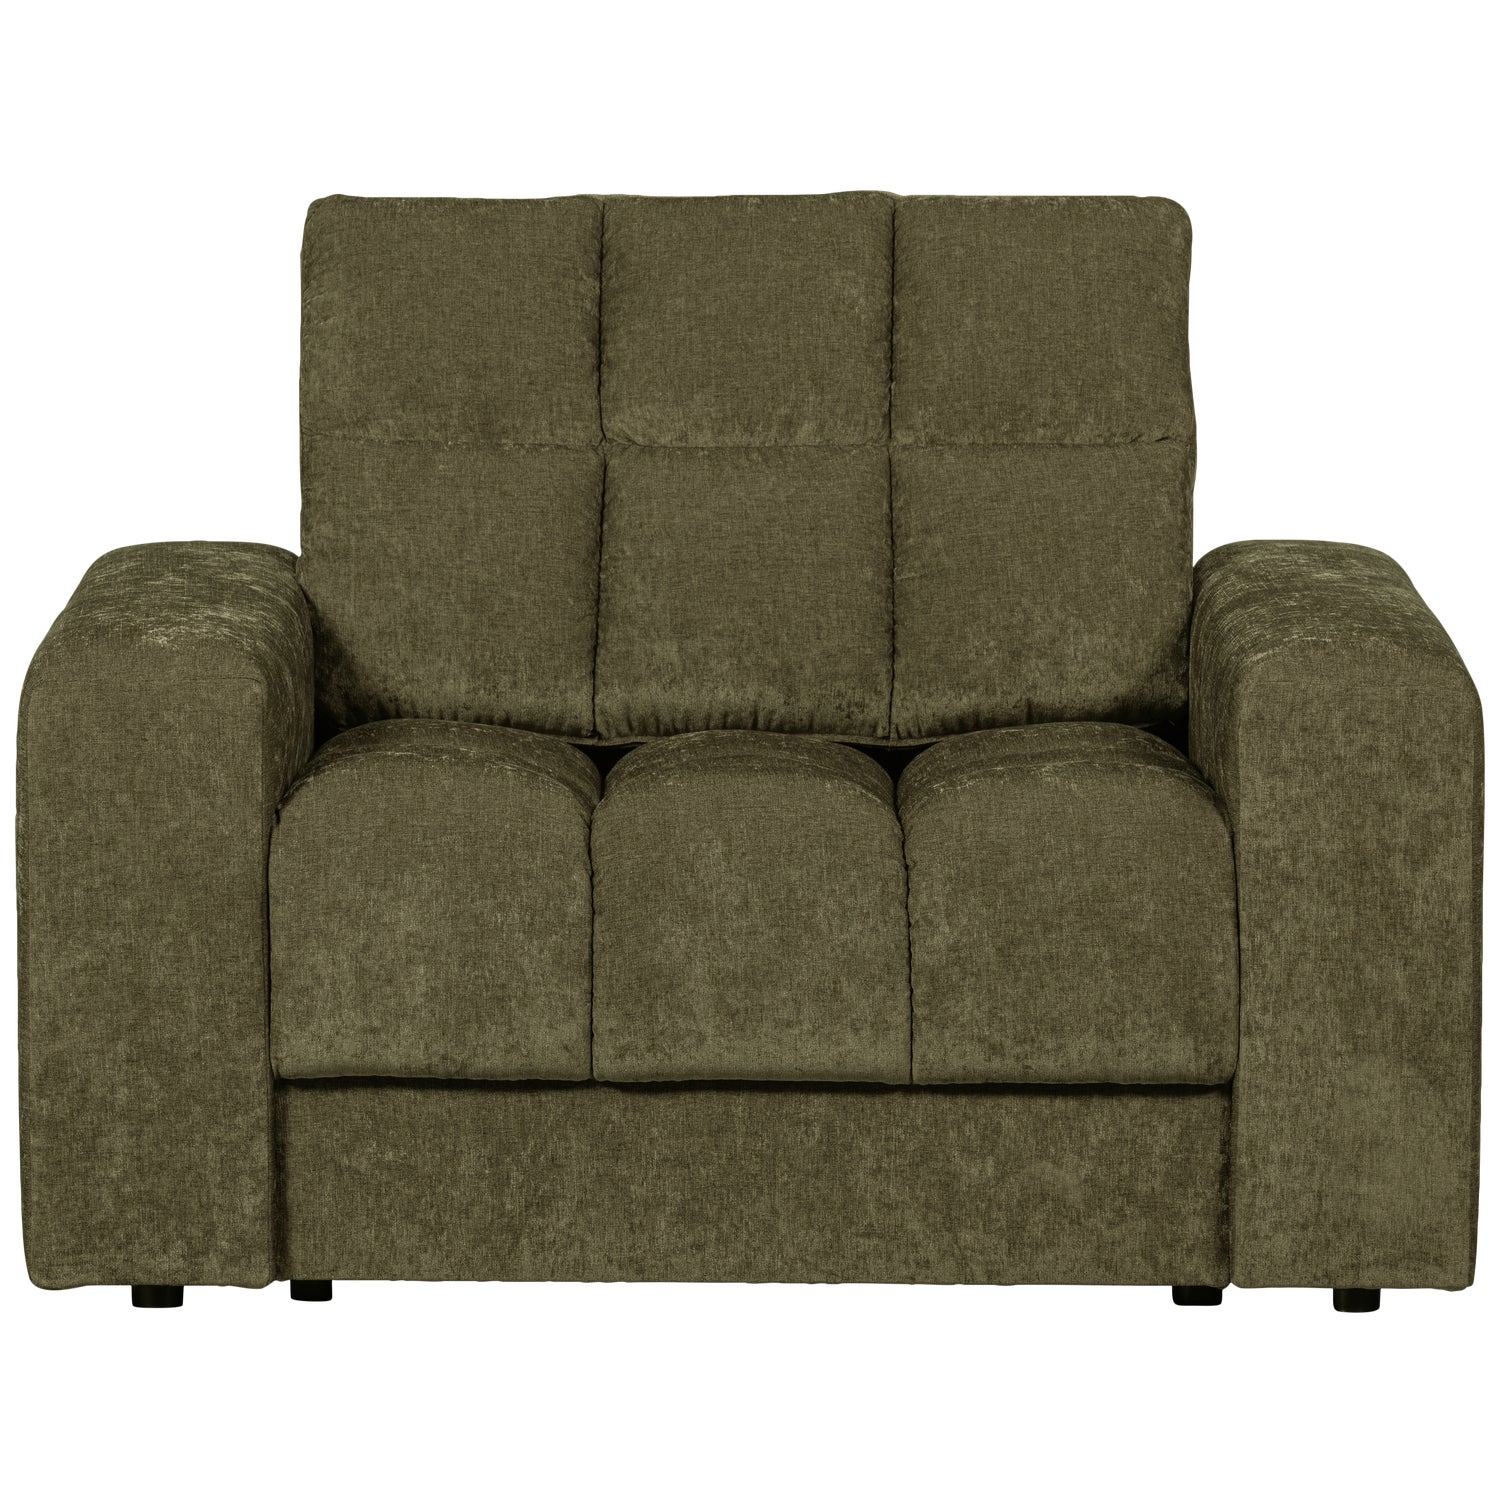 379003-G-01_VS_WE_Second_date_fauteuil_vintage_groen.png?auto=webp&format=png&width=1500&height=1500